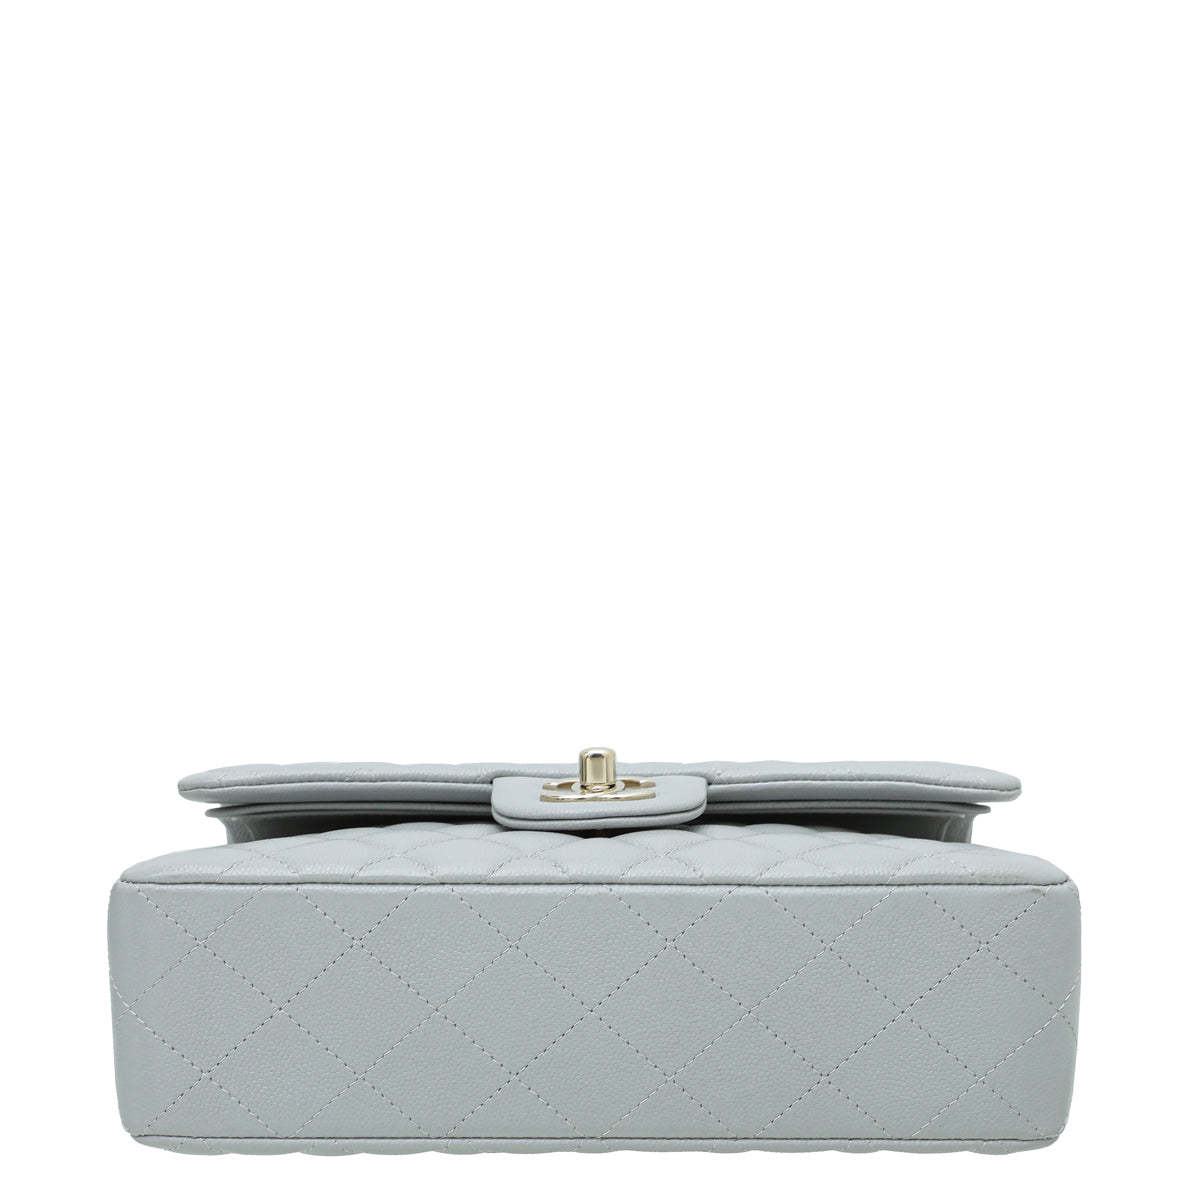 Chanel Grey CC Classic Double Flap Medium Bag